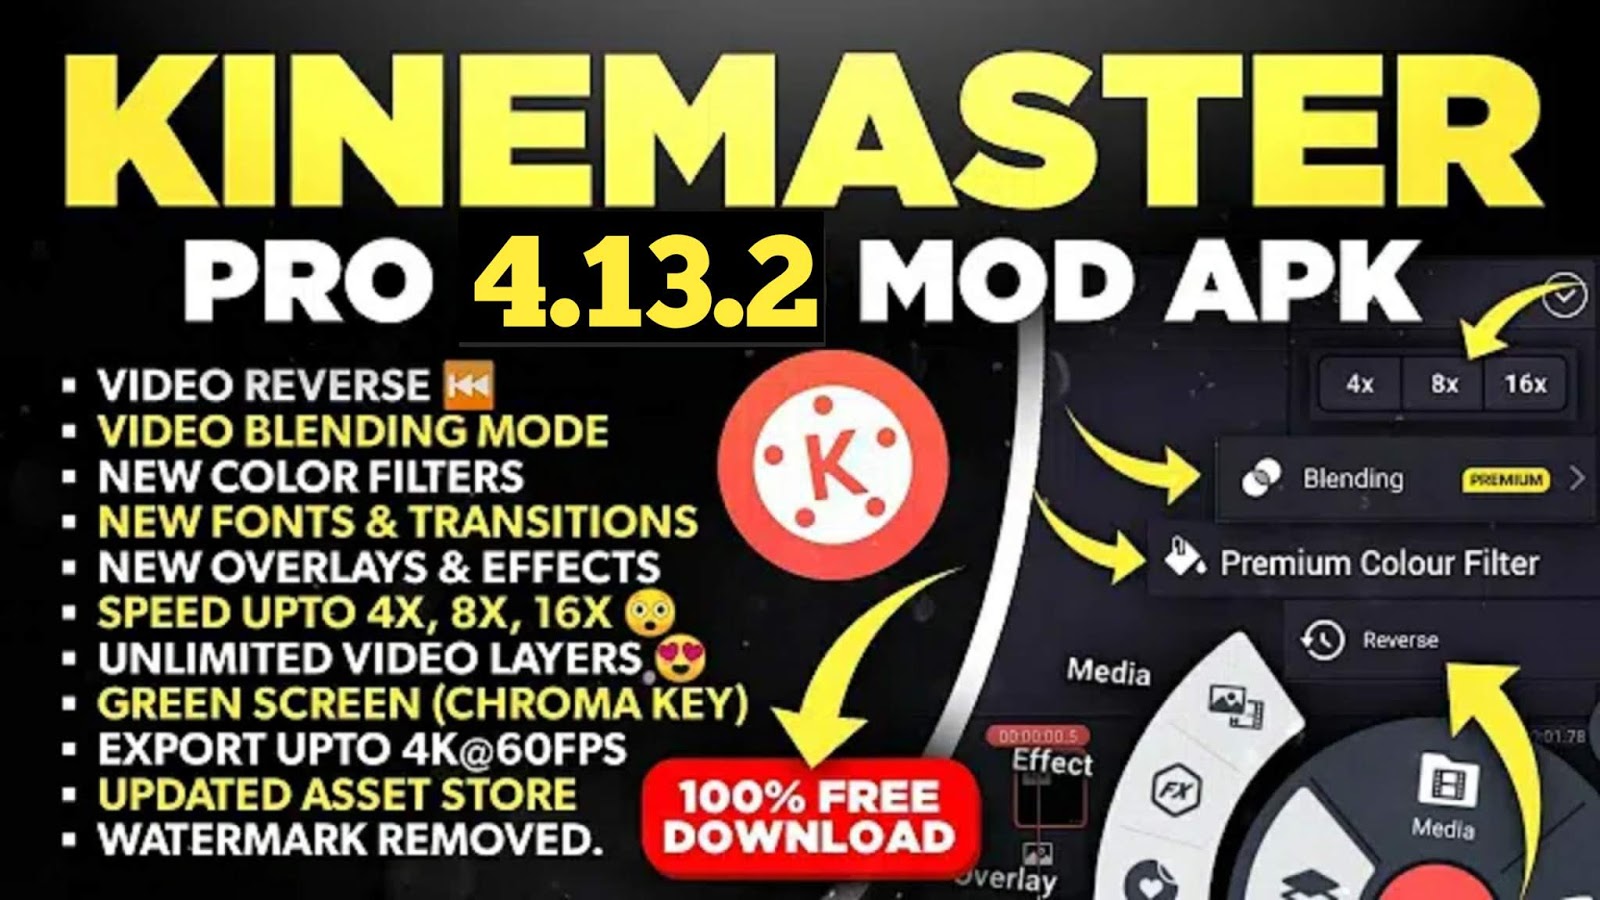 KineMaster Pro Mod APK 4.13.4 ( No Watermark ) - Technical Oscar